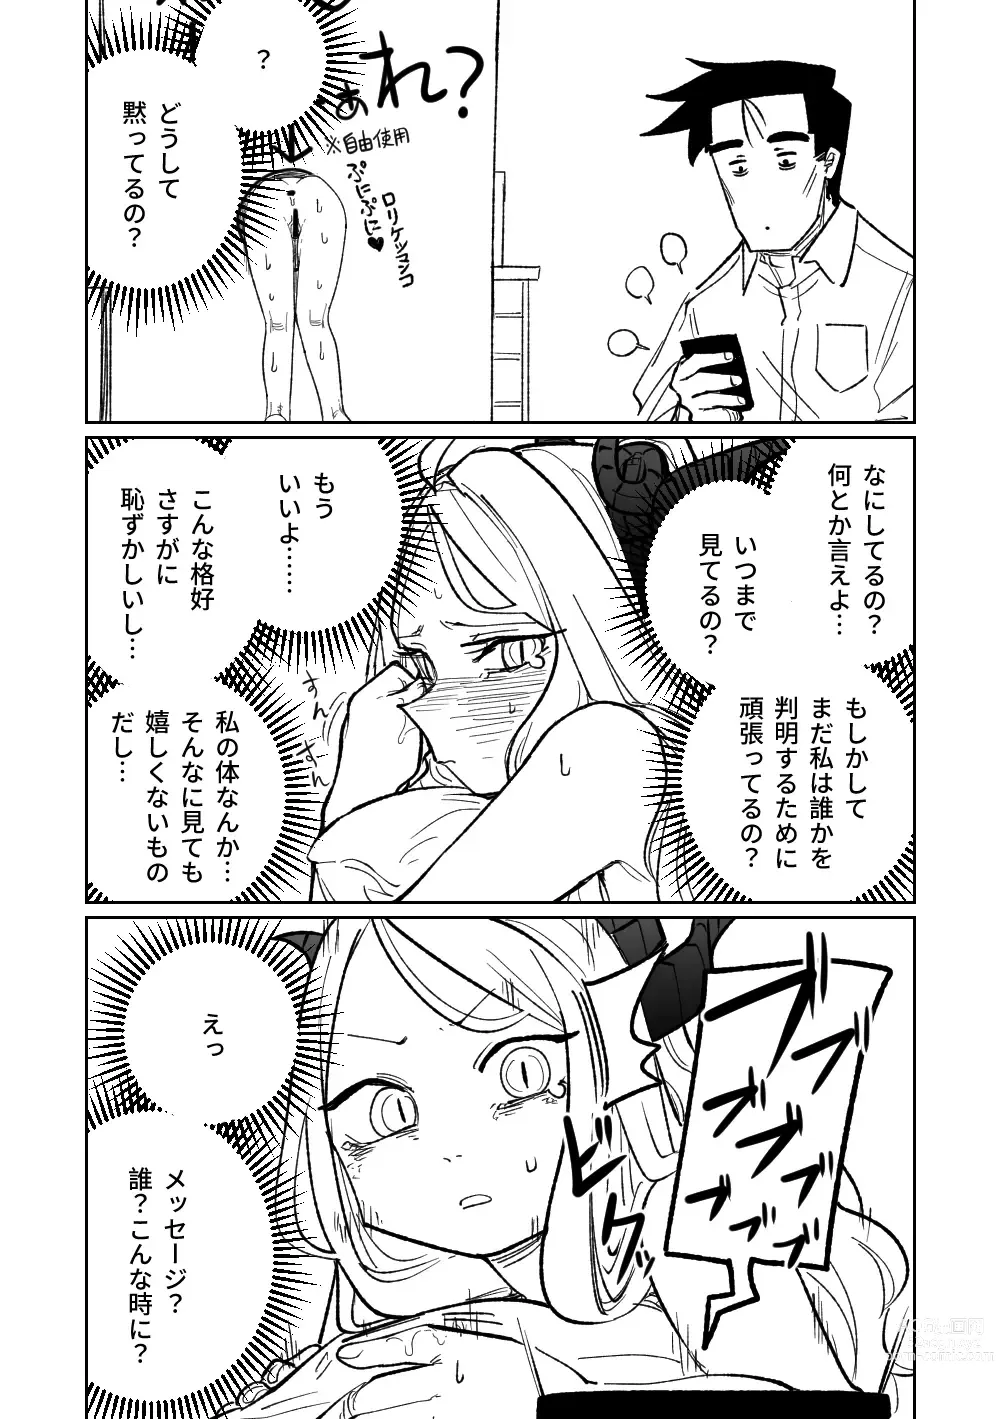 Page 9 of doujinshi Kabeshiri